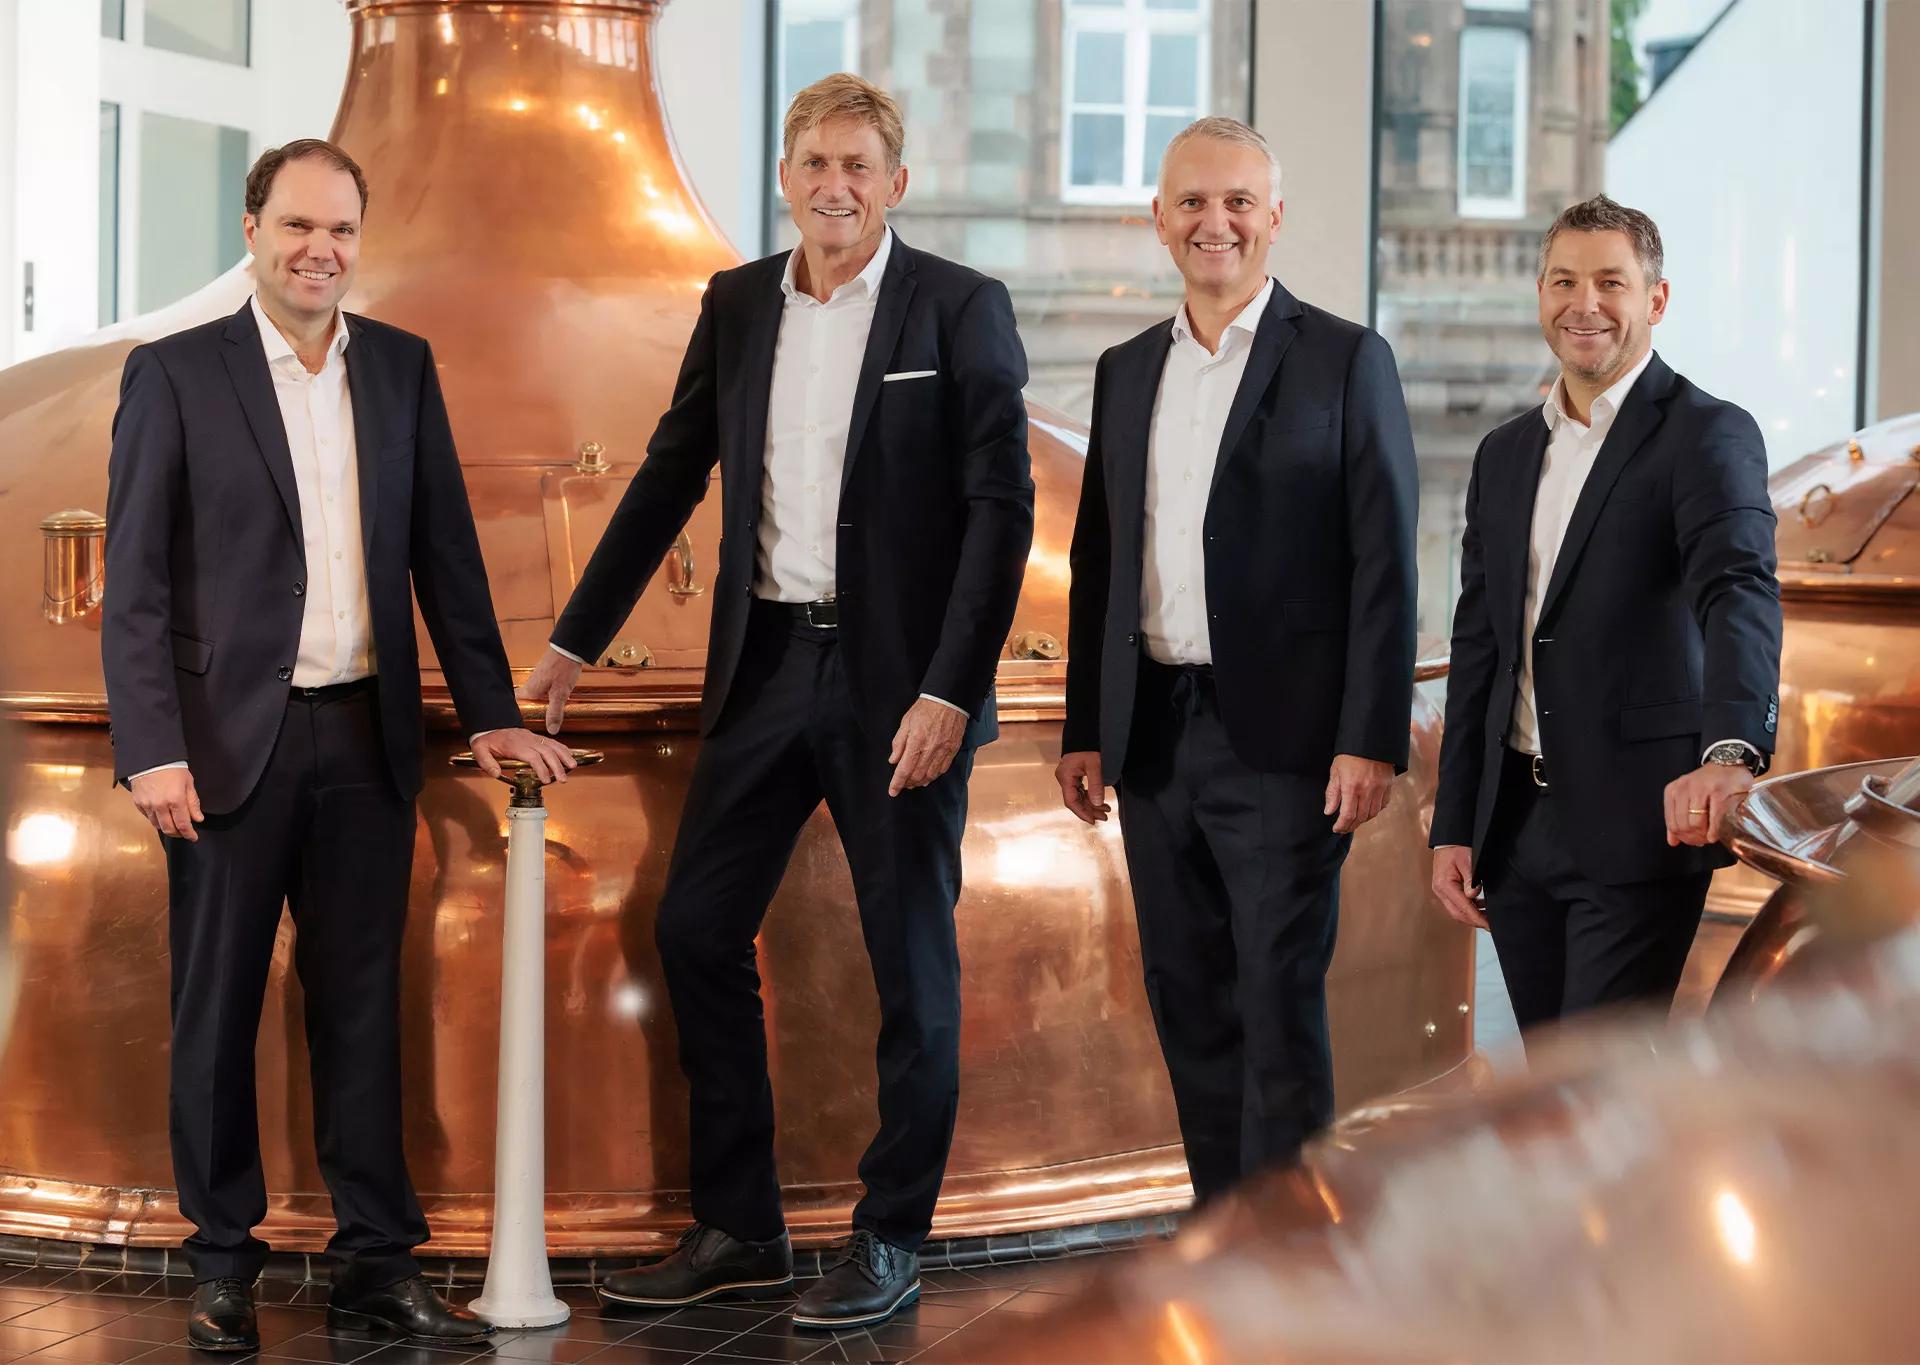 Geschäftsführung der Bitburger Braugruppe, vier Männer im Anzug stehen am Kupferkessel
